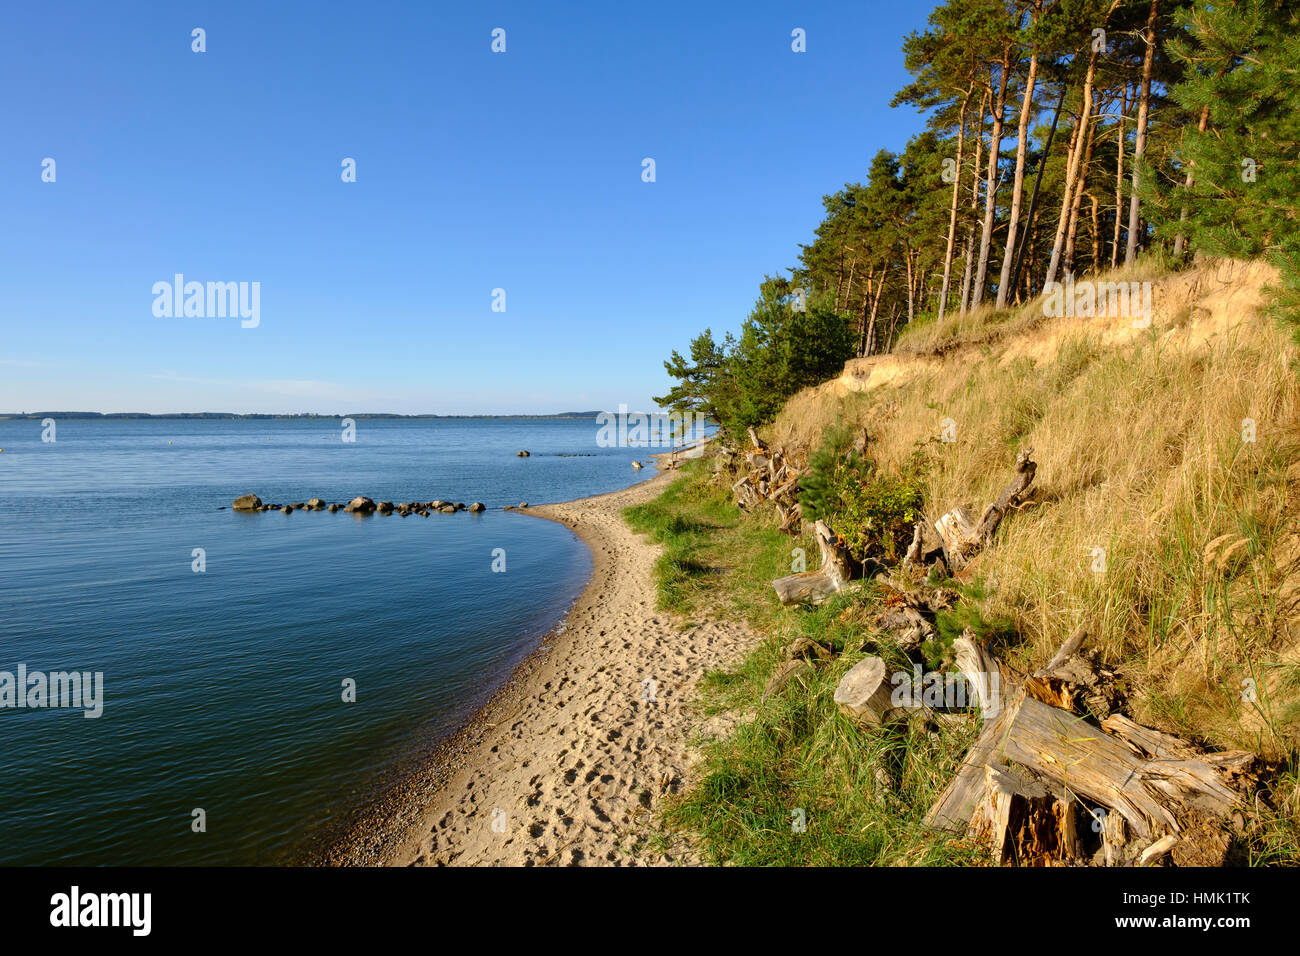 Shore con alberi di pino, Penisola Peenestrom Gnitz, Luetow, Usedom, Meclemburgo-Pomerania, Germania Foto Stock